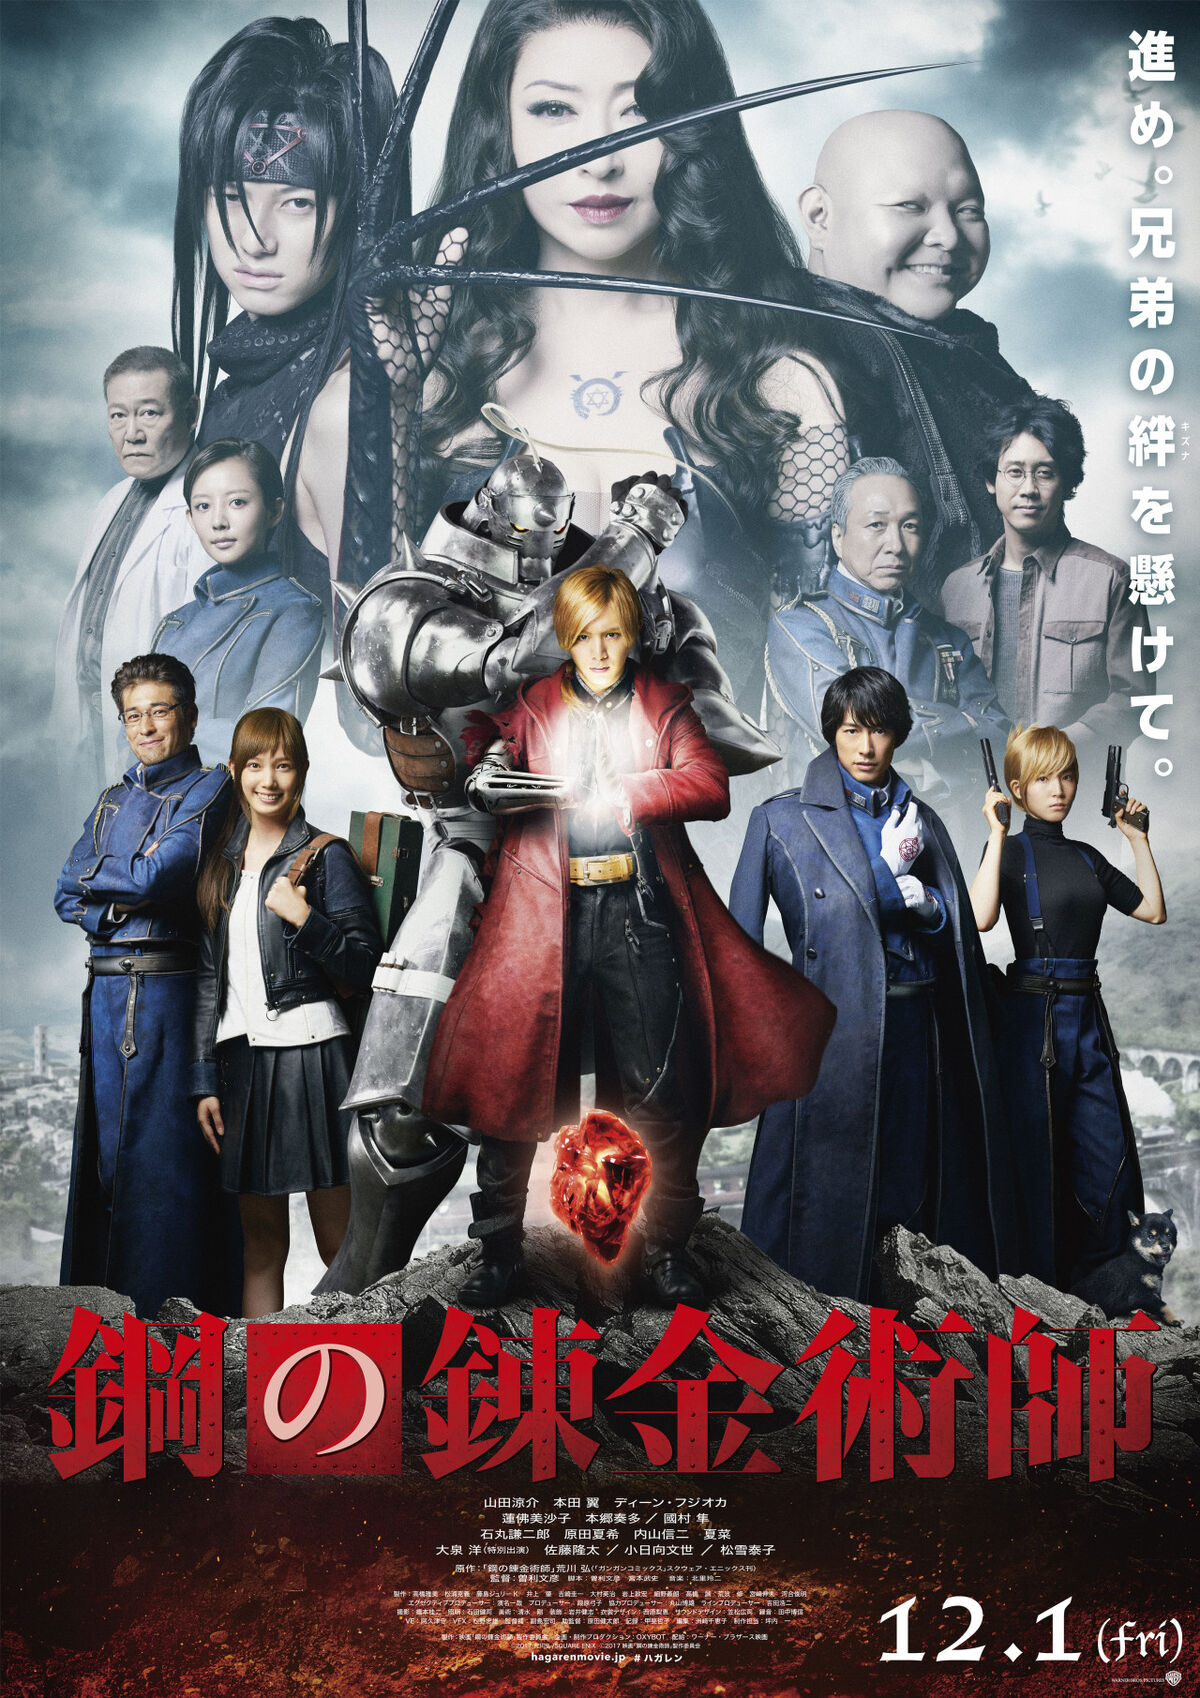 Netflix Just Added Both 'Fullmetal Alchemist' Anime Series